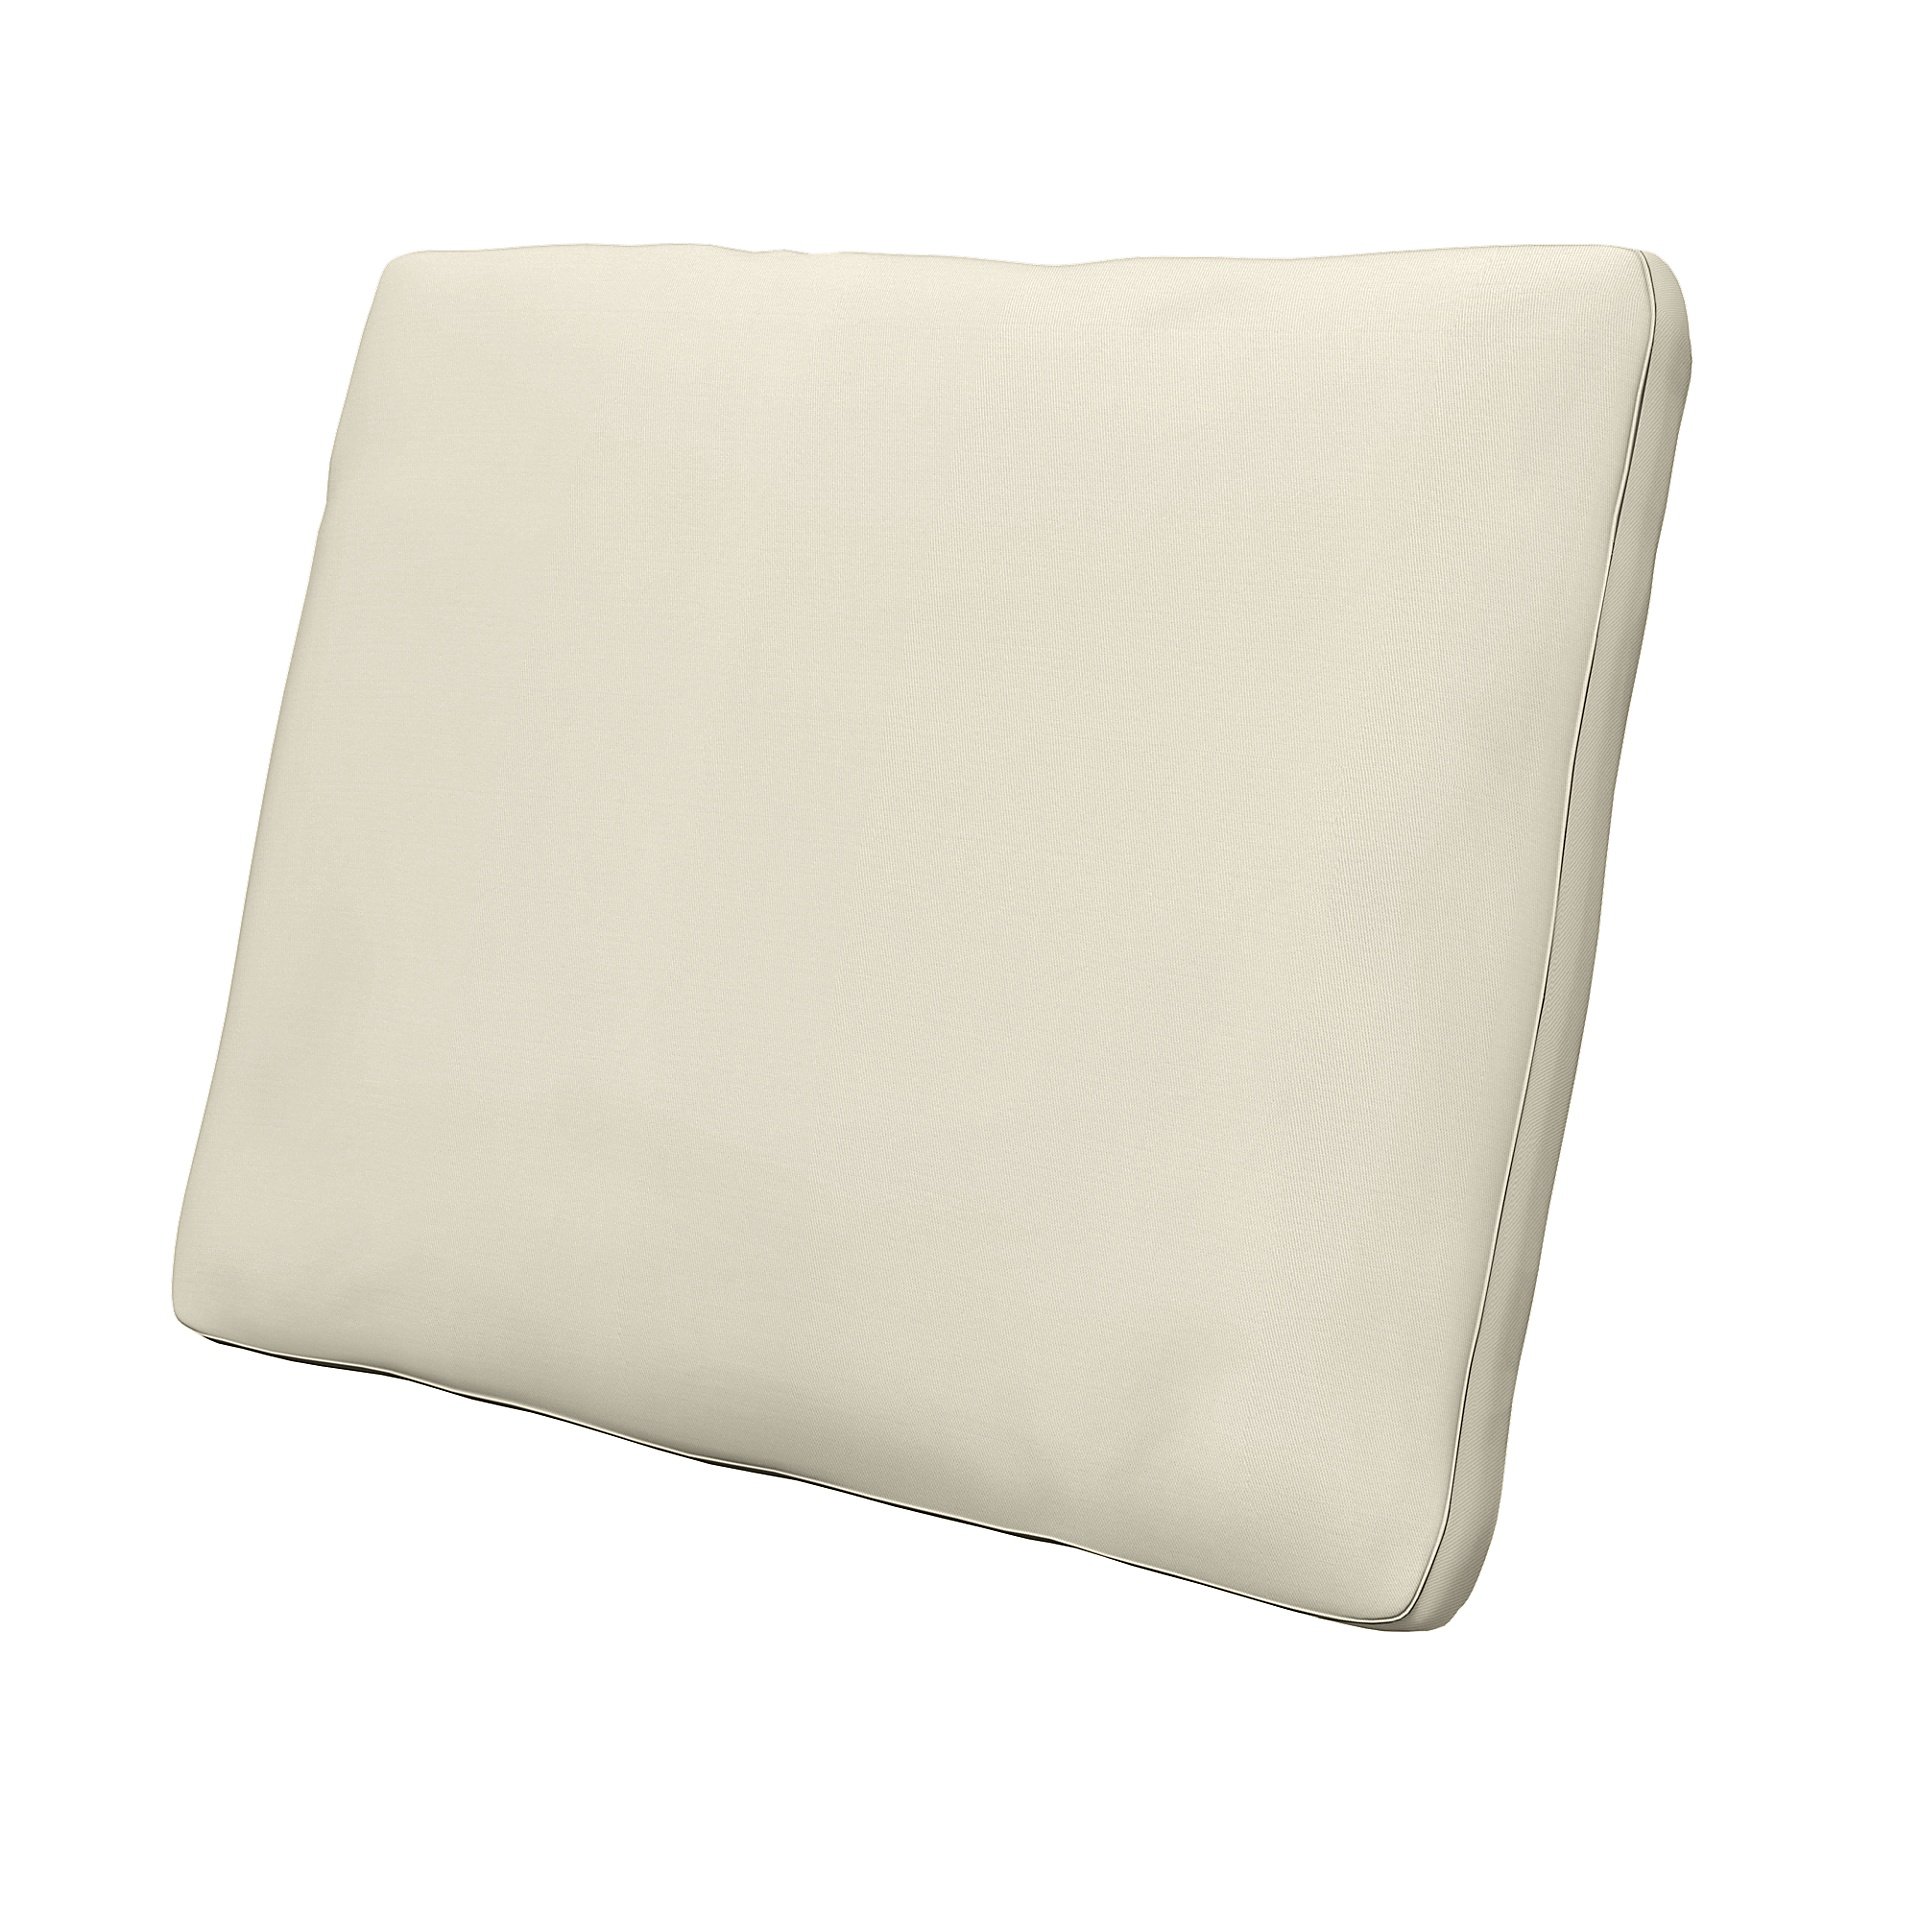 IKEA - Cushion Cover Karlstad 58x48x5 cm, Tofu, Cotton - Bemz